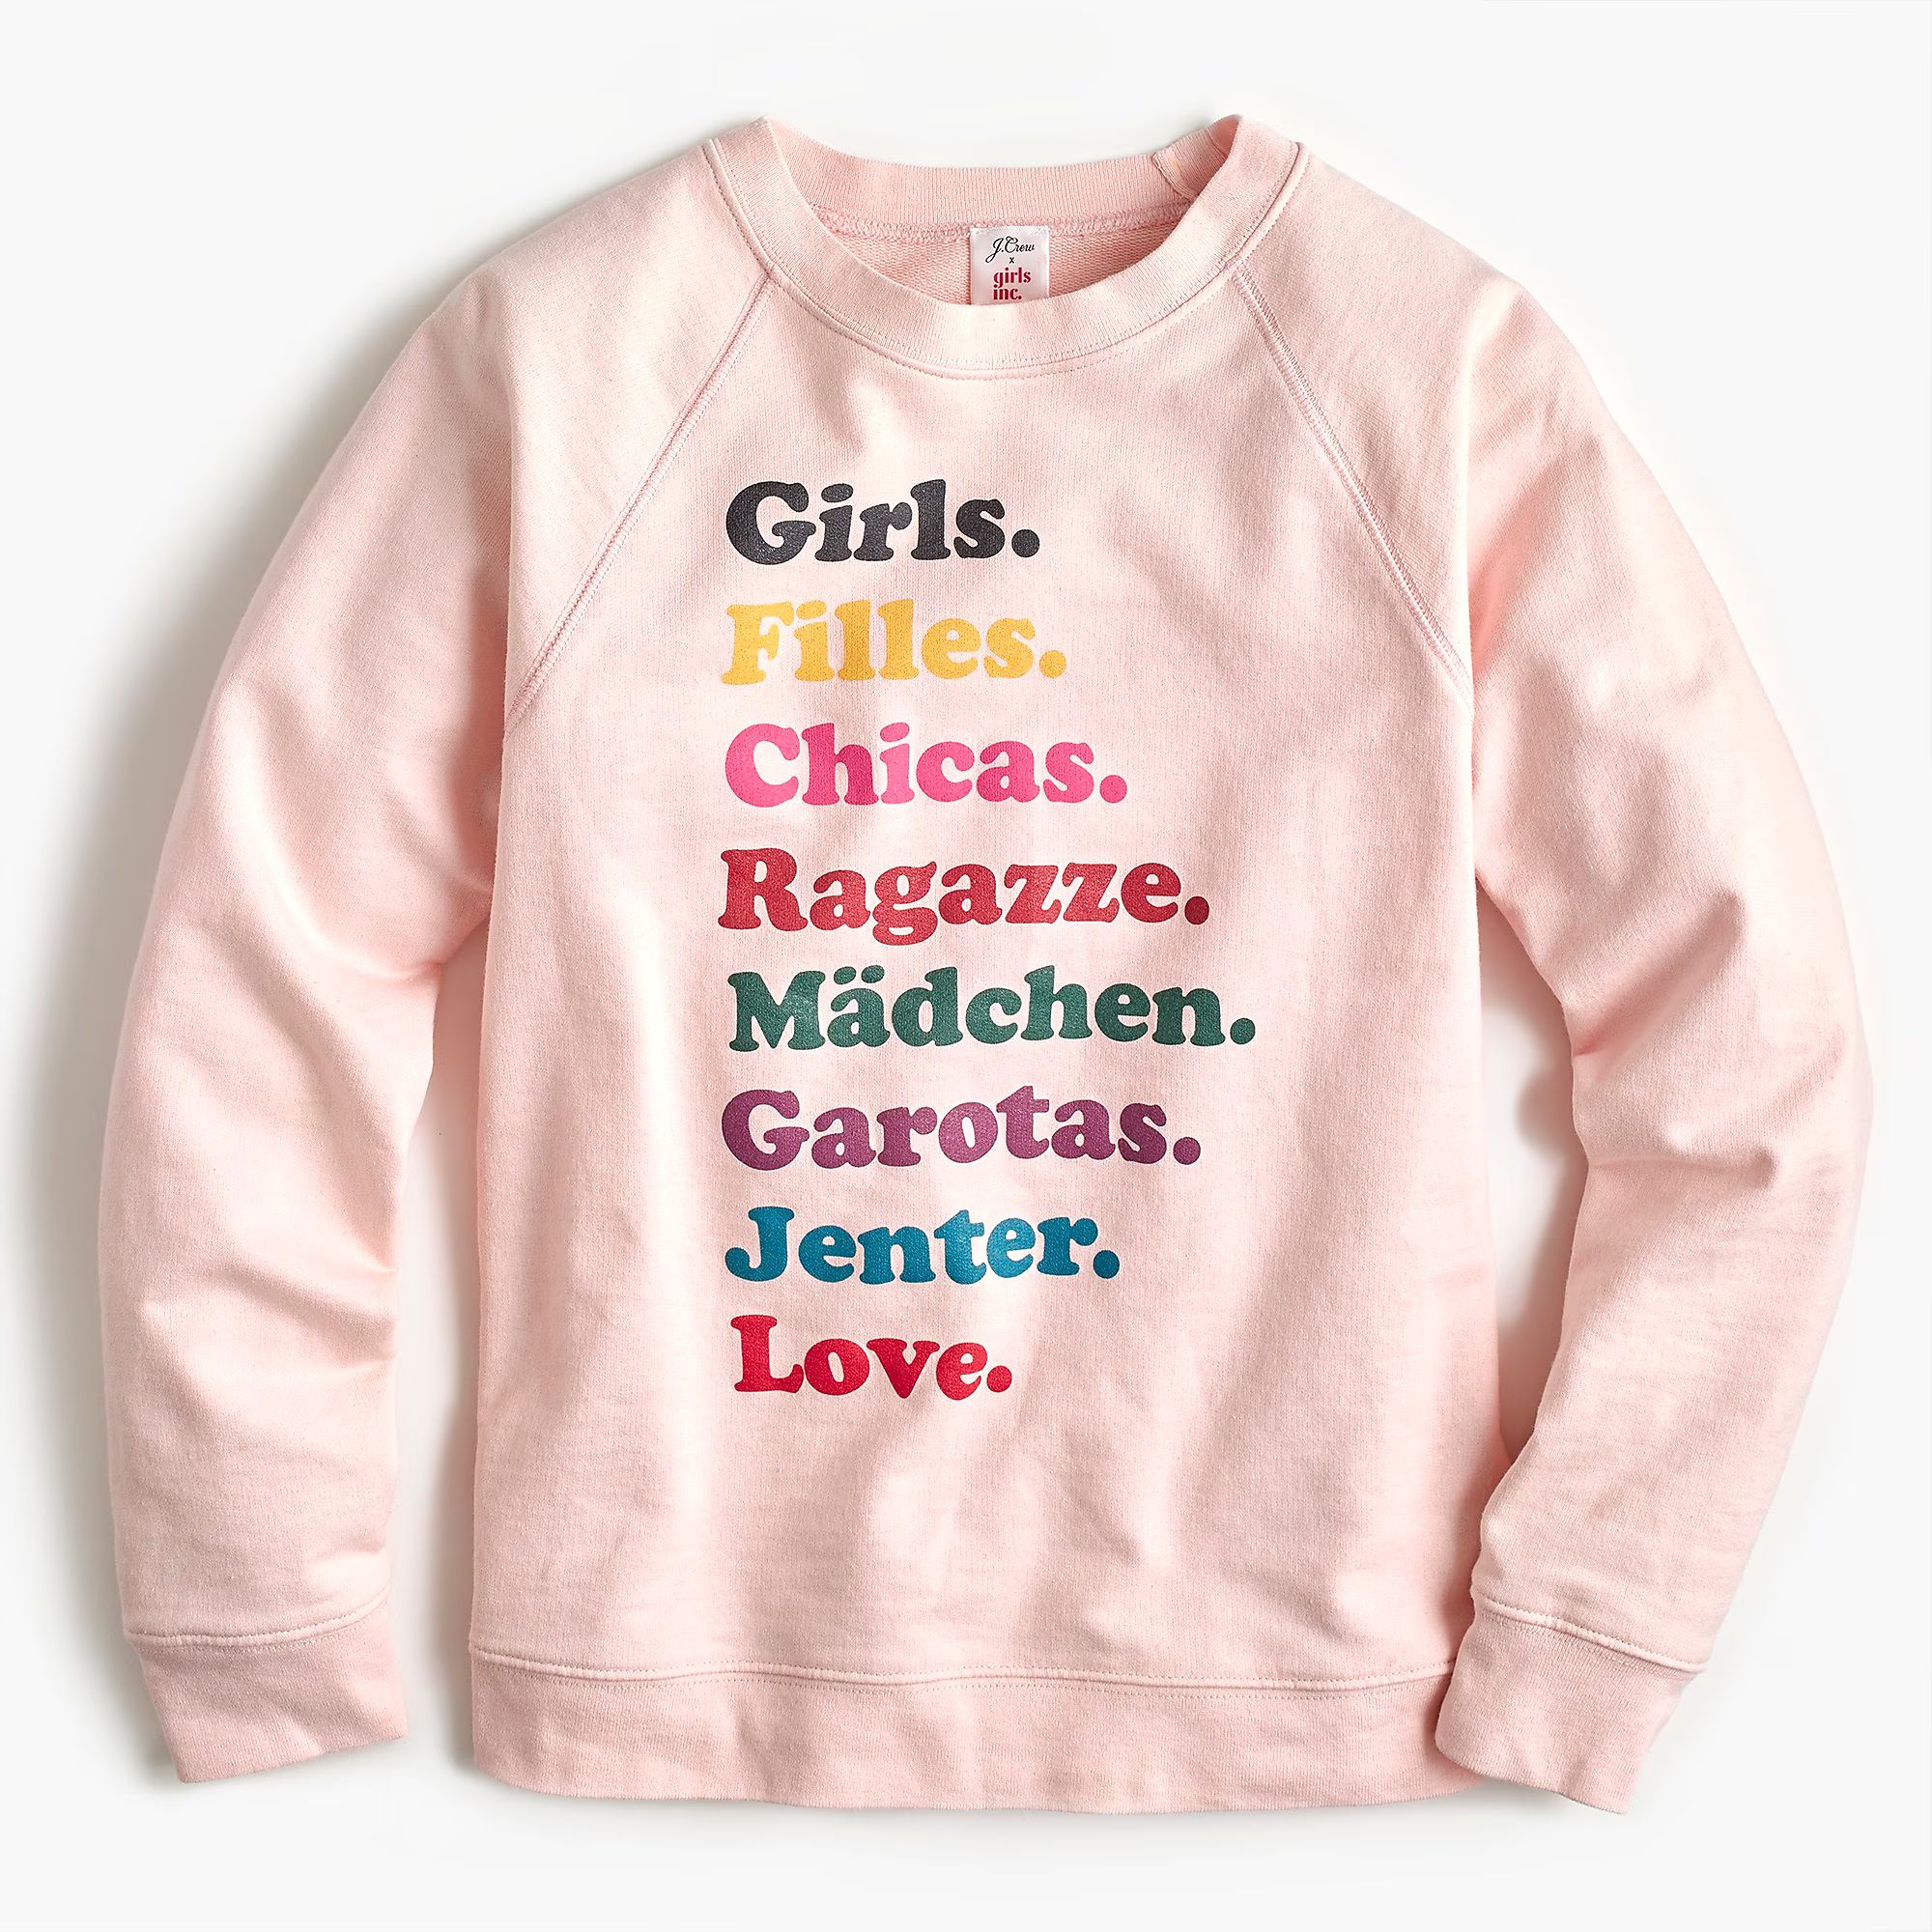 J.Crew x Girls Inc. "Girls" sweatshirt | J.Crew US